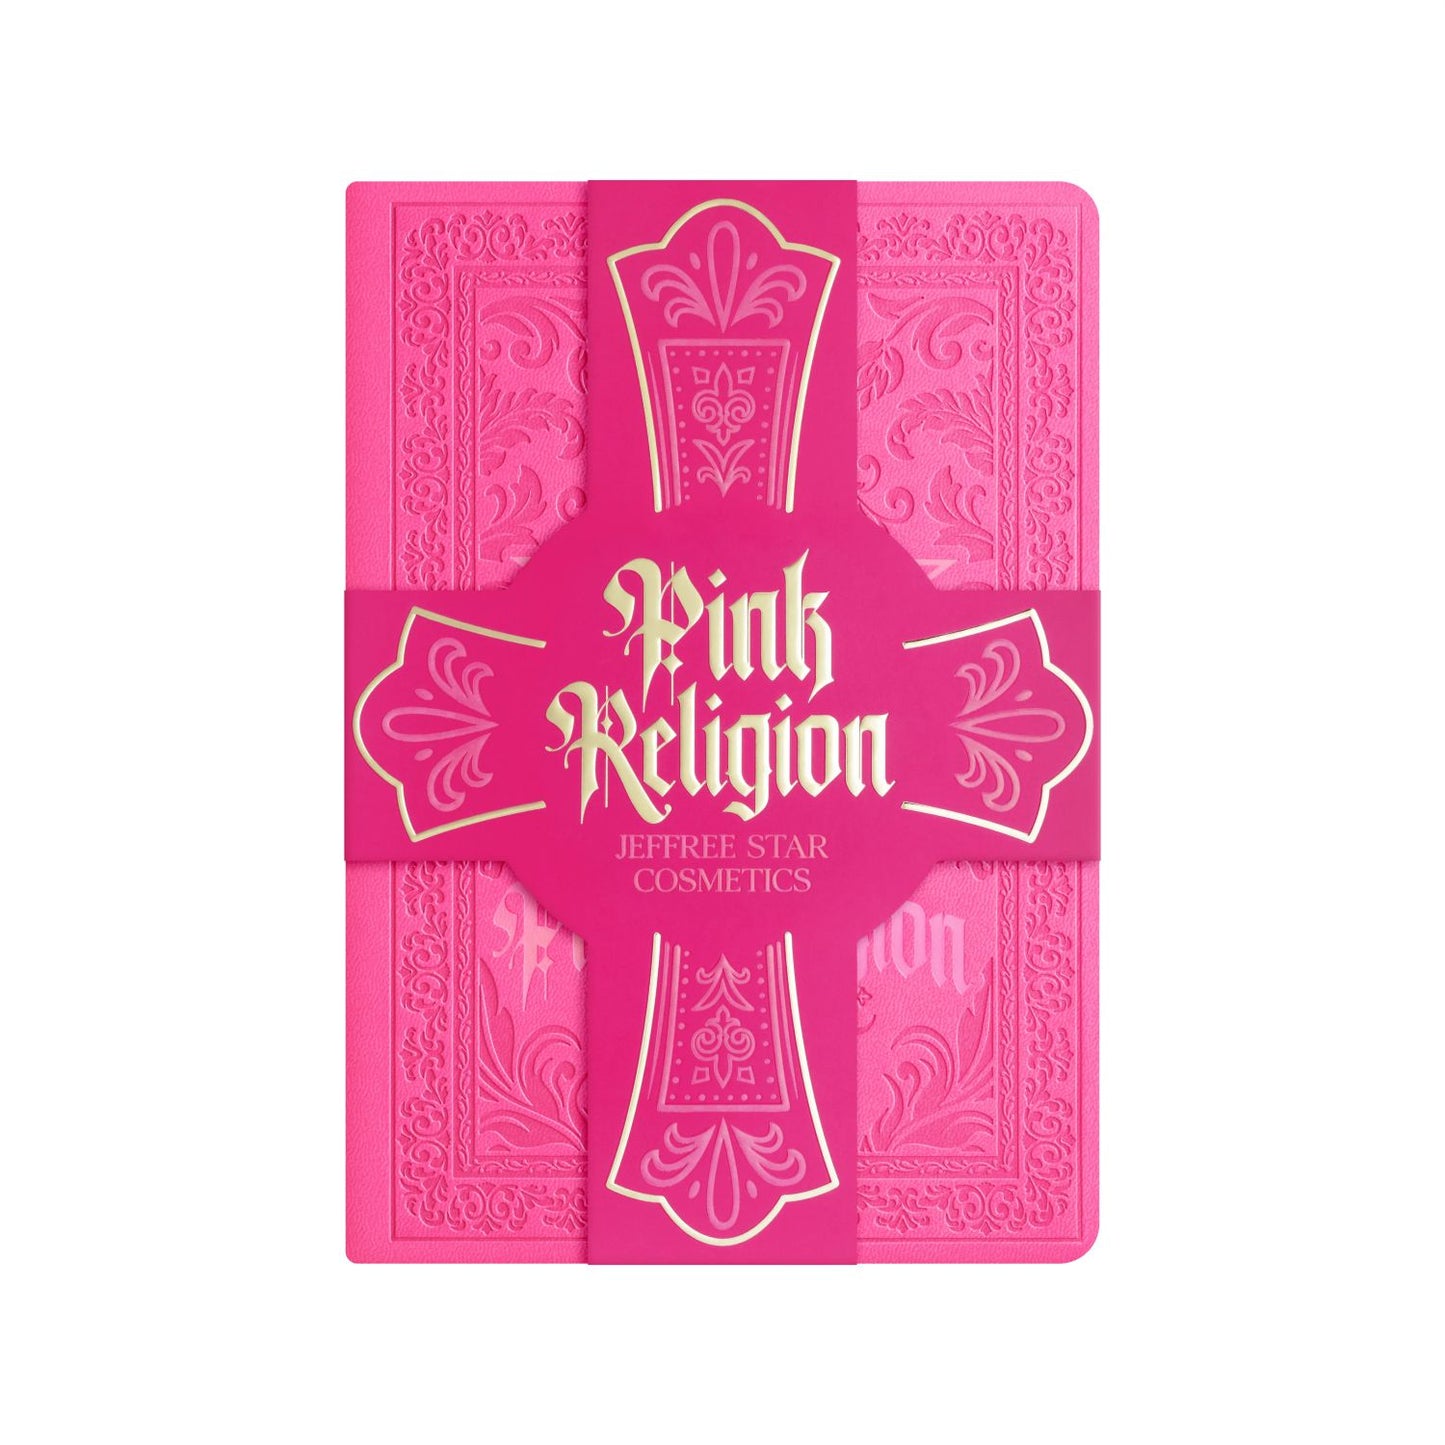 Paleta de Sombras PINK RELIGION JEFFREE STAR